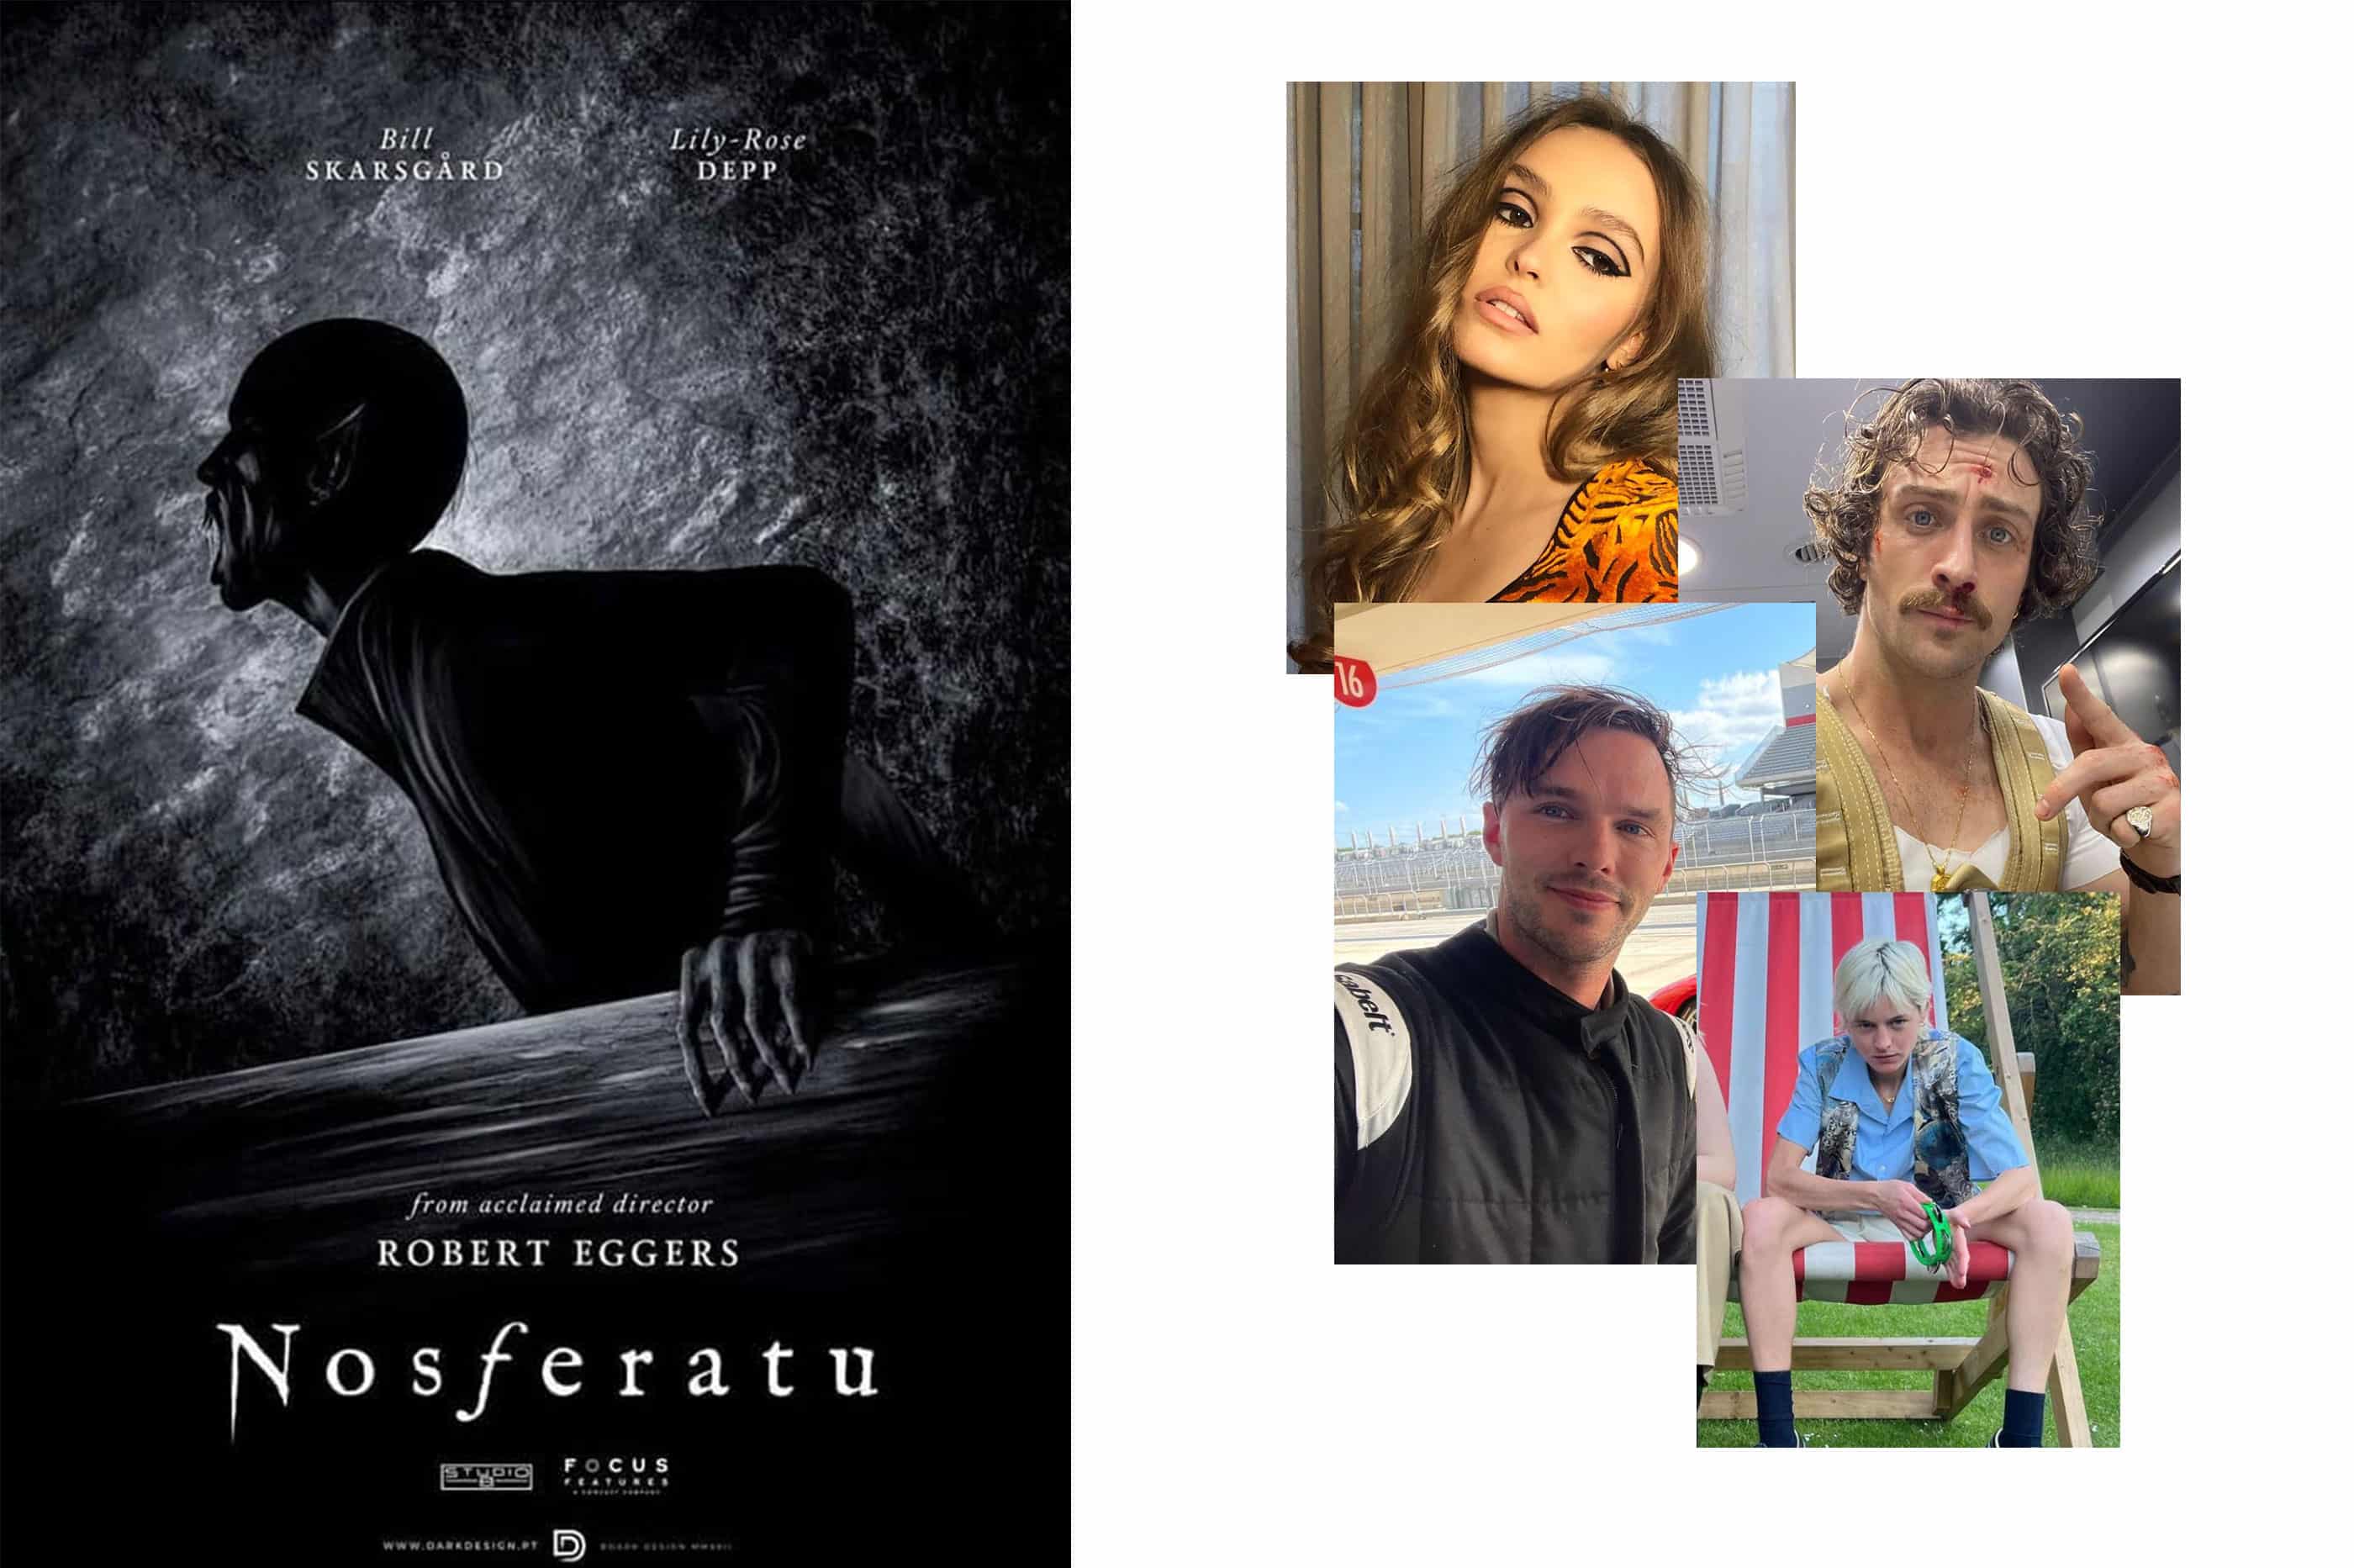 'Nosferatu' film remake Cast, plot, release date and more